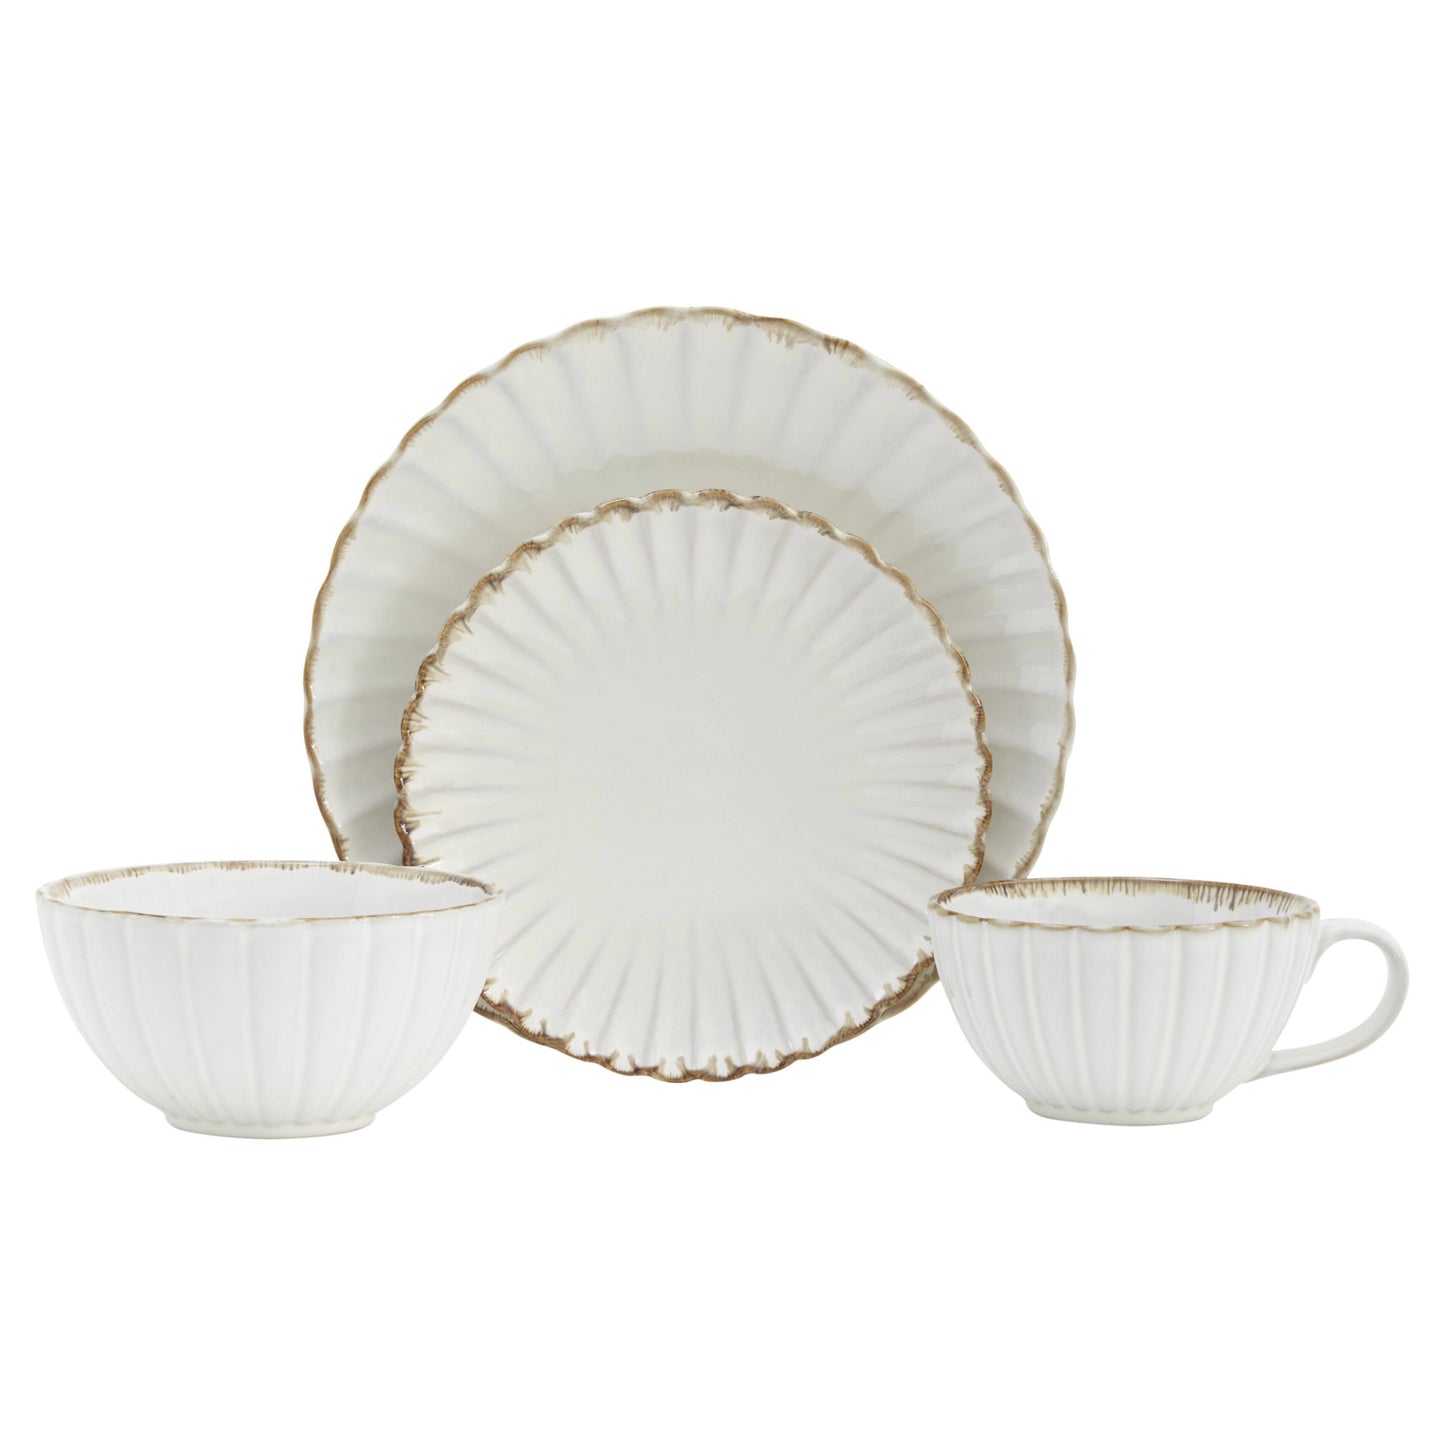 Ivory Ceramic Dinnerware Set - Sixteen Piece